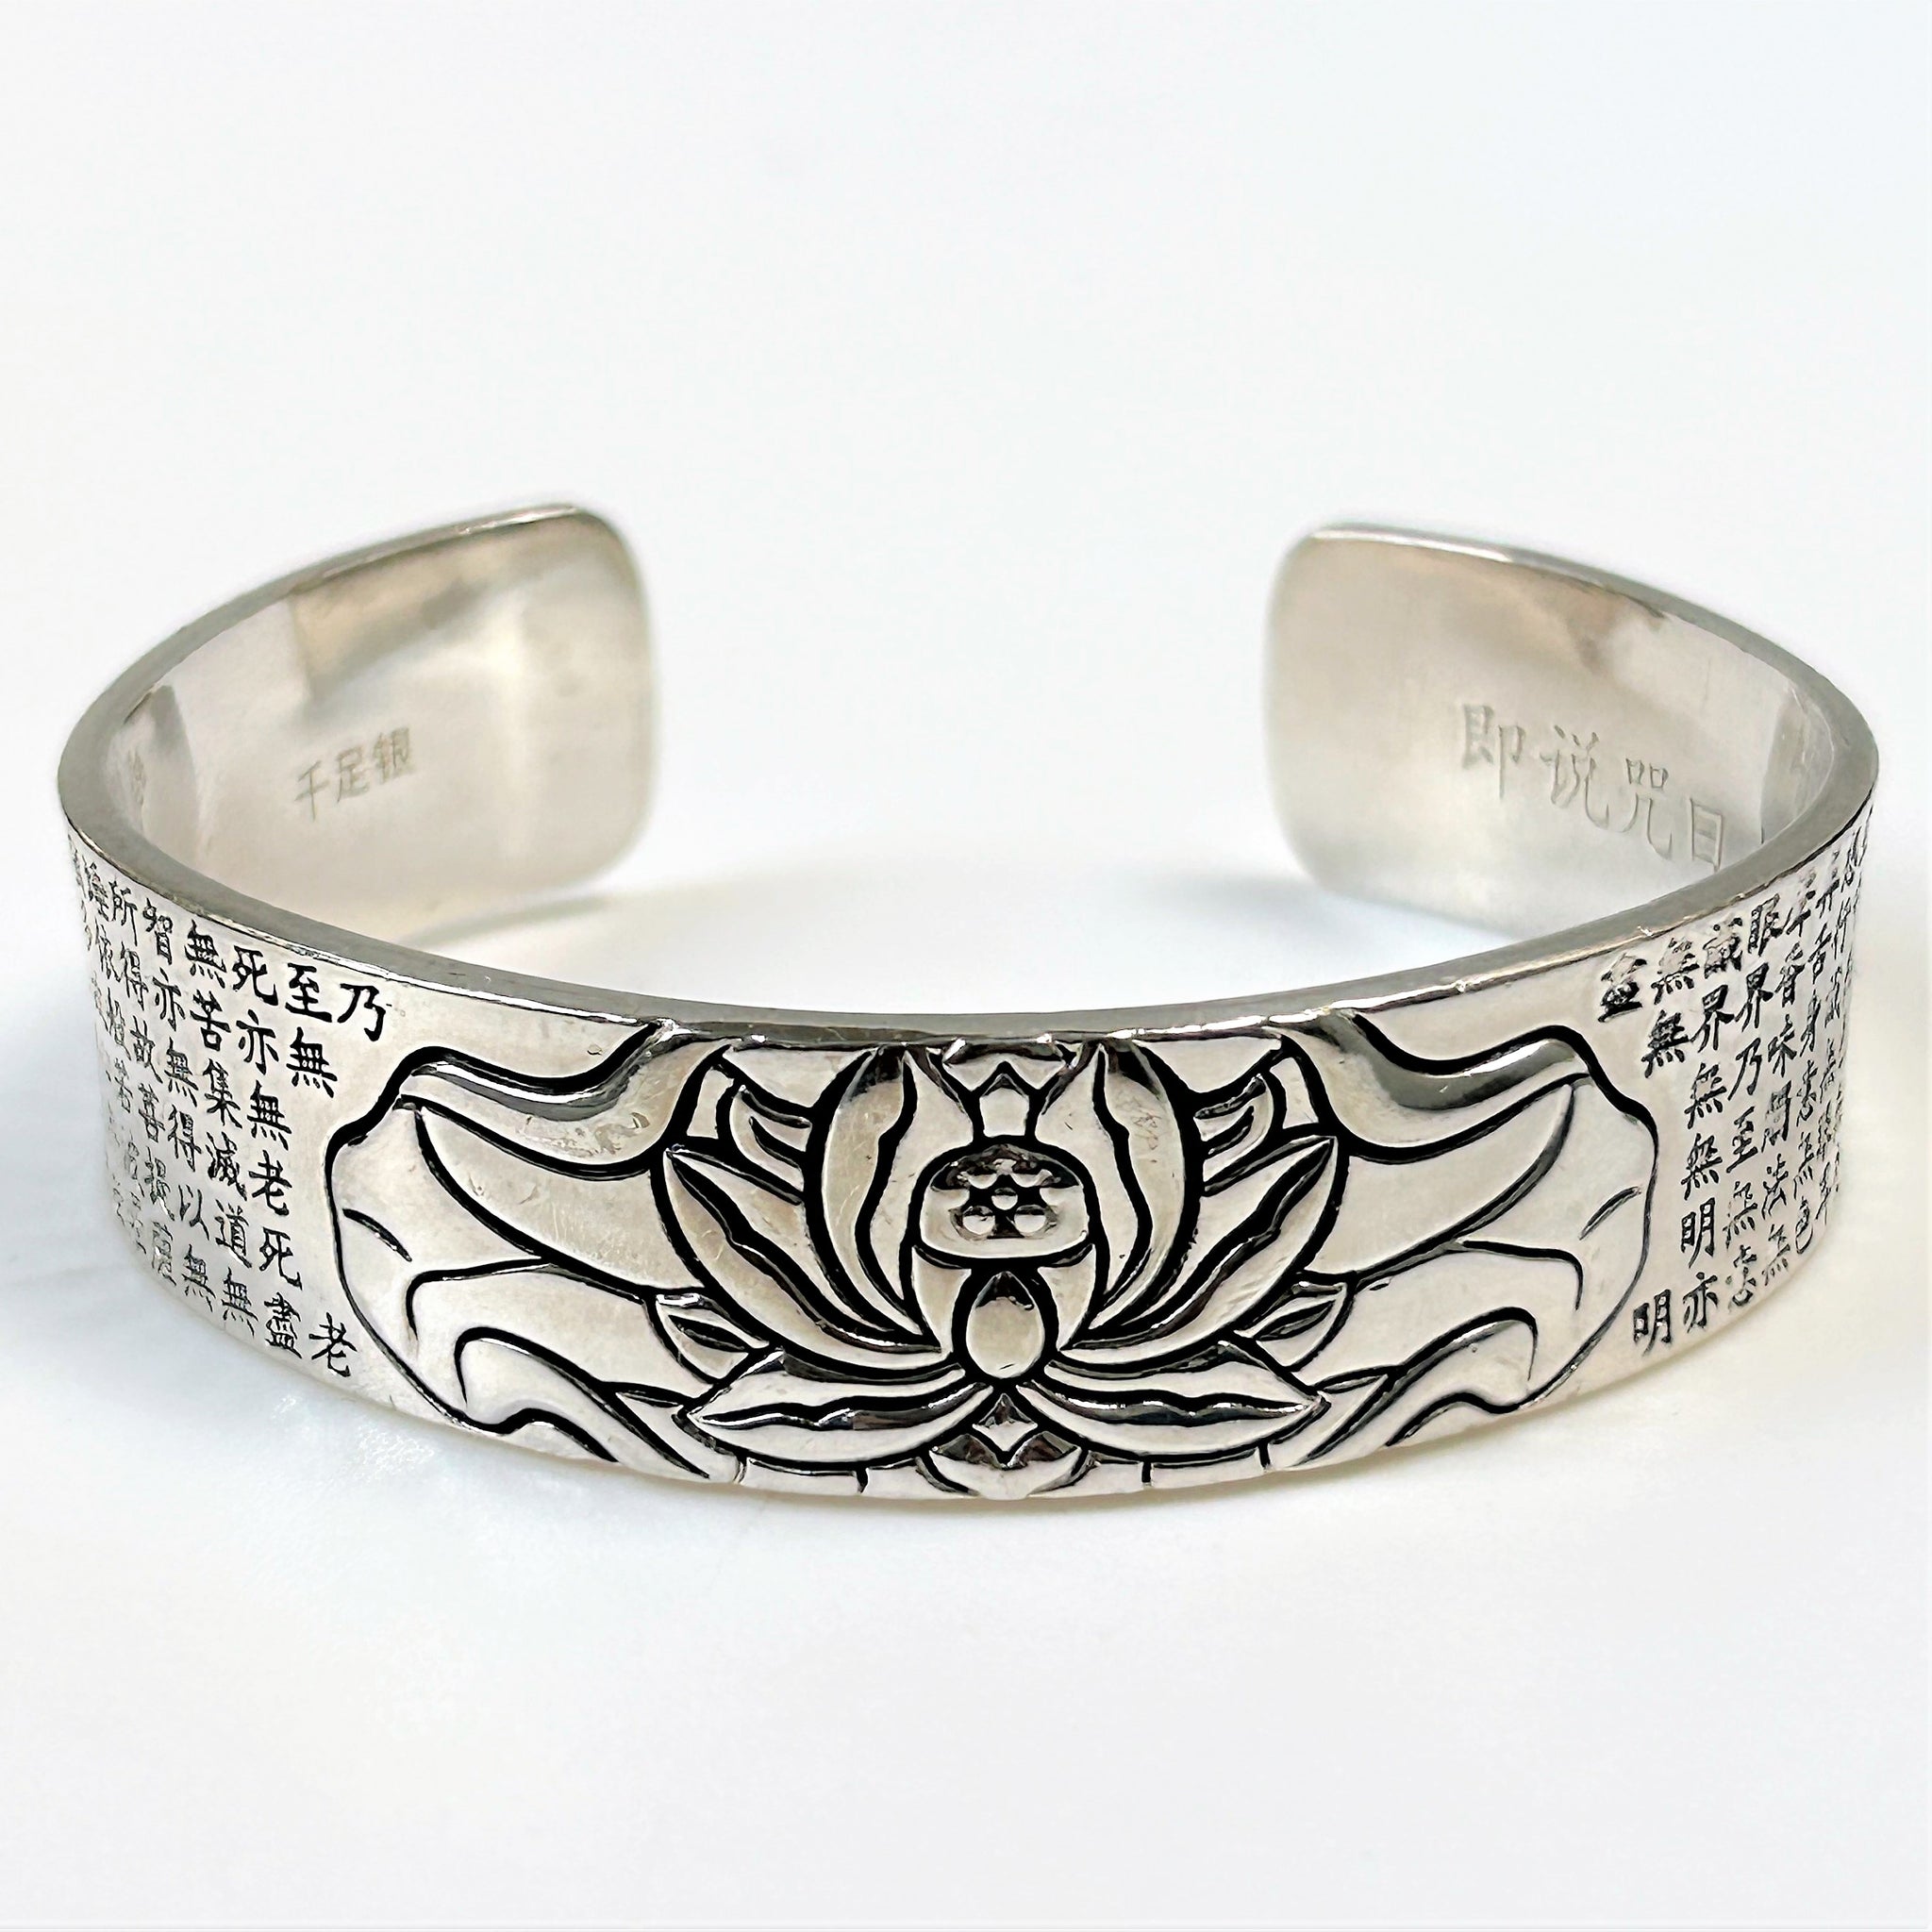 Chinese Silver “Open Lotus Flower” Bangle Bracelet